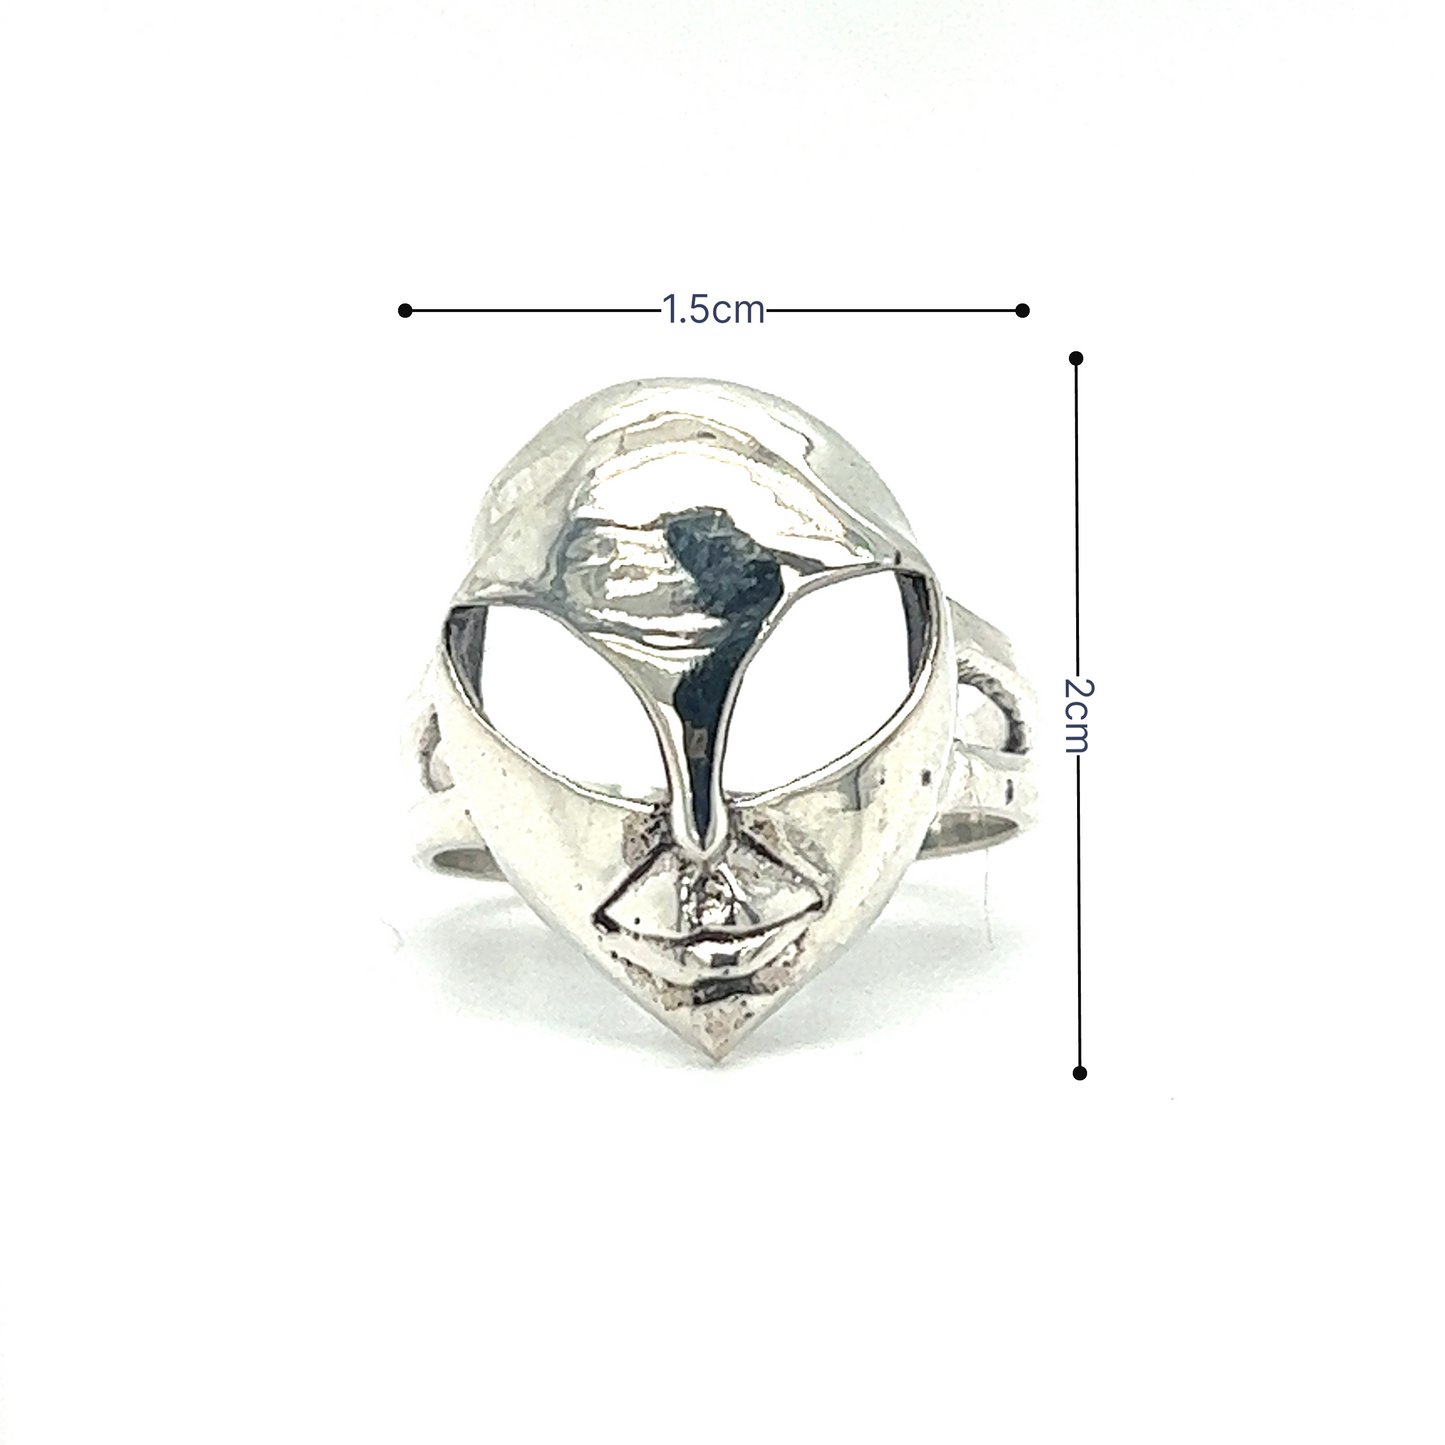 A fashion statement piece - a Super Silver Silver Alien Head Ring.